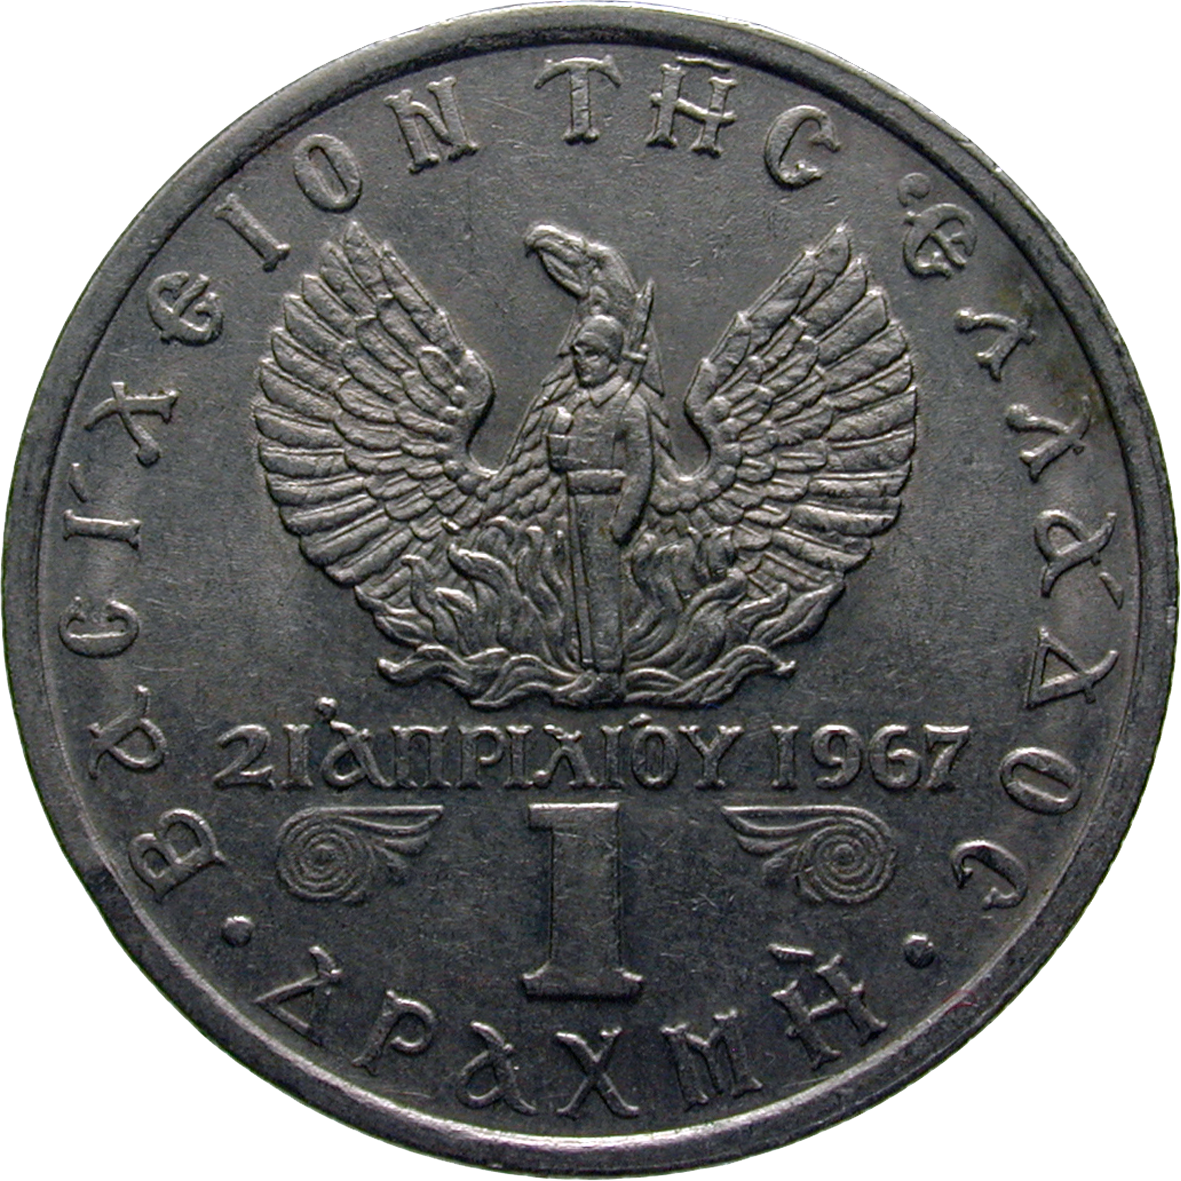 Königreich Griechenland, Konstantin II., 1 Drachma 1971 (reverse)